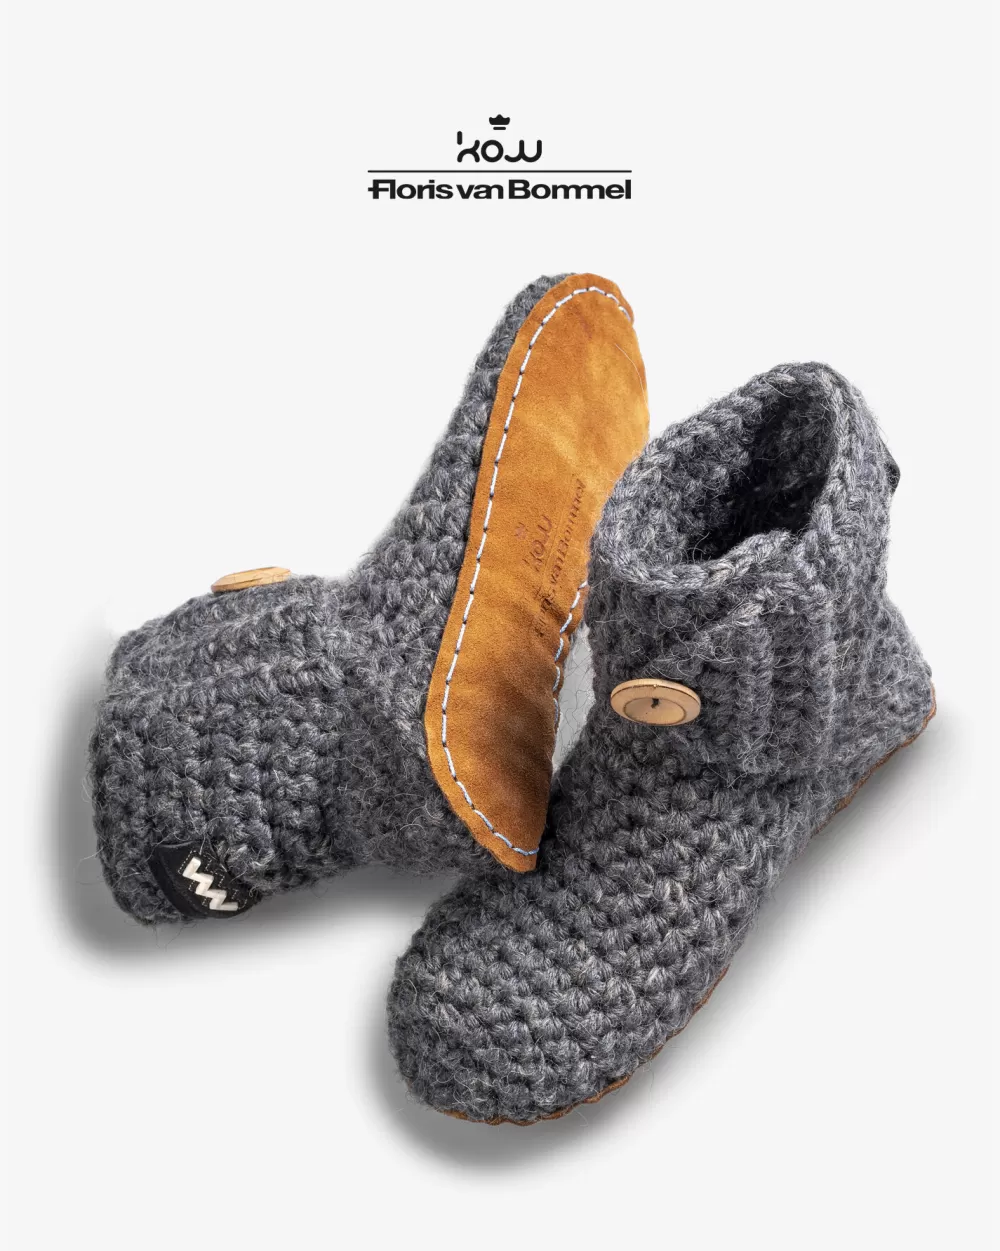 Kingdom of Wow home slippers *Floris van Bommel Outlet